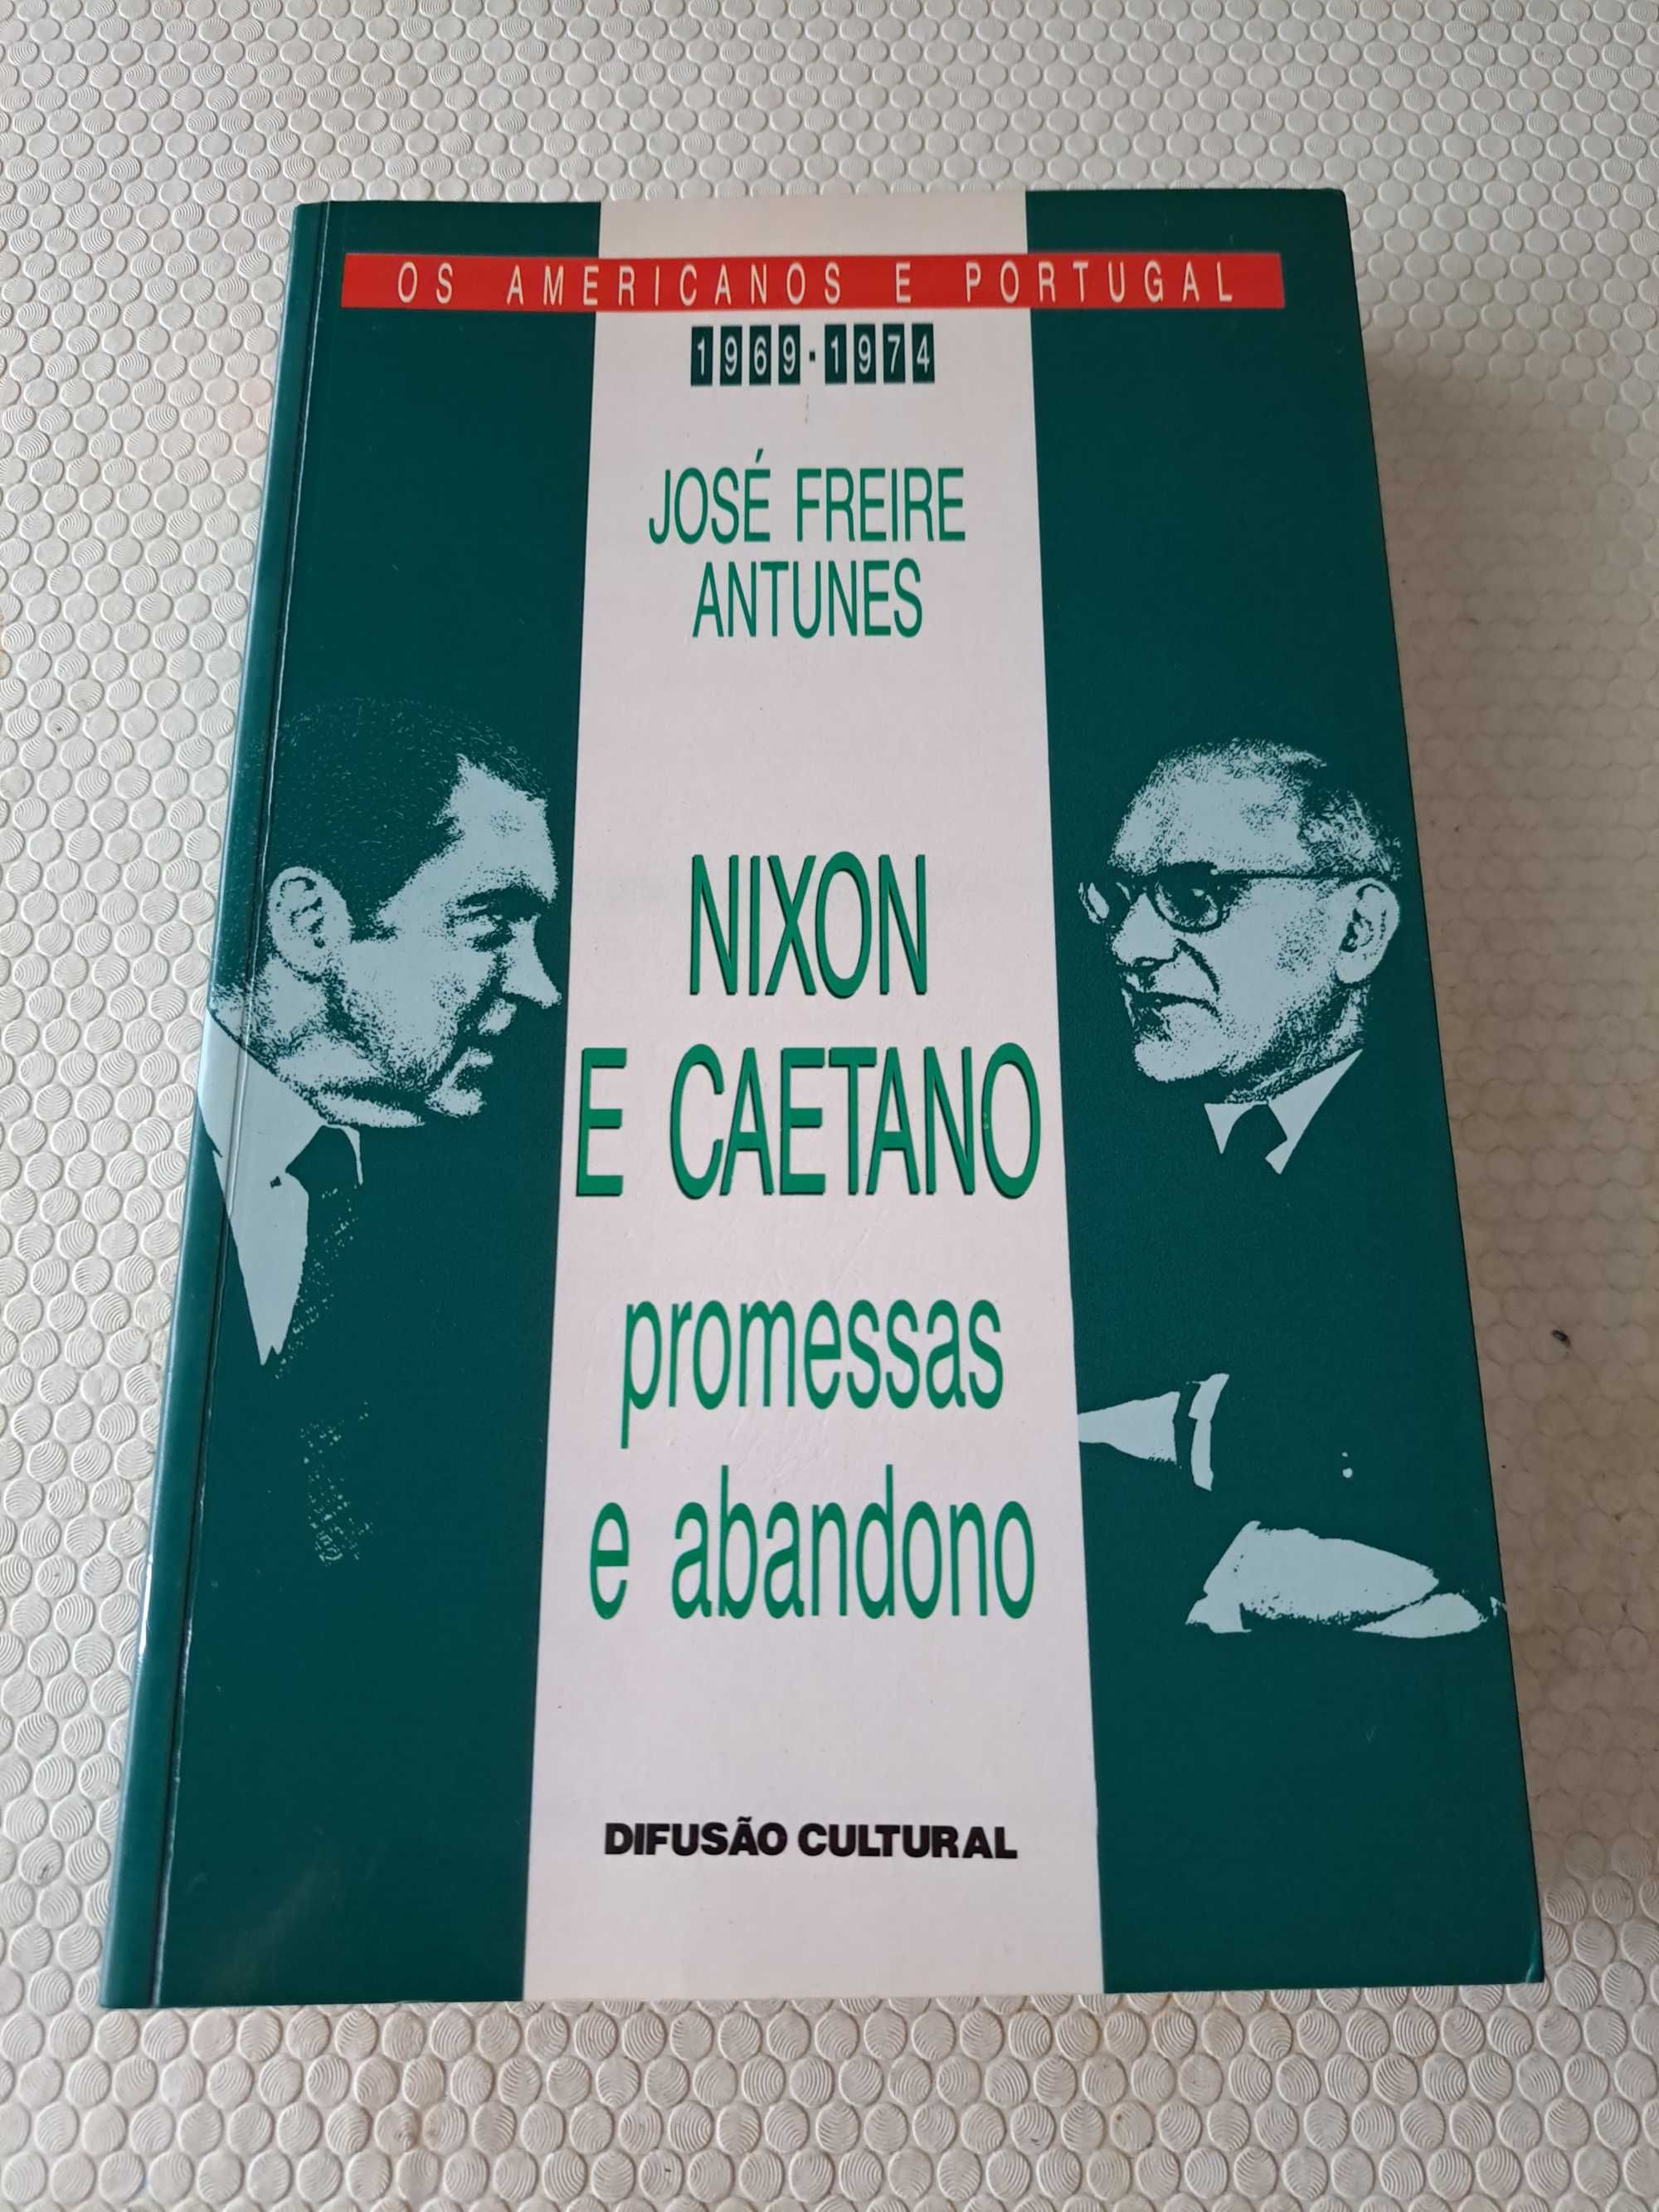 Nixon e Caetano  - Promessas e abandono  - José Freire Antunes